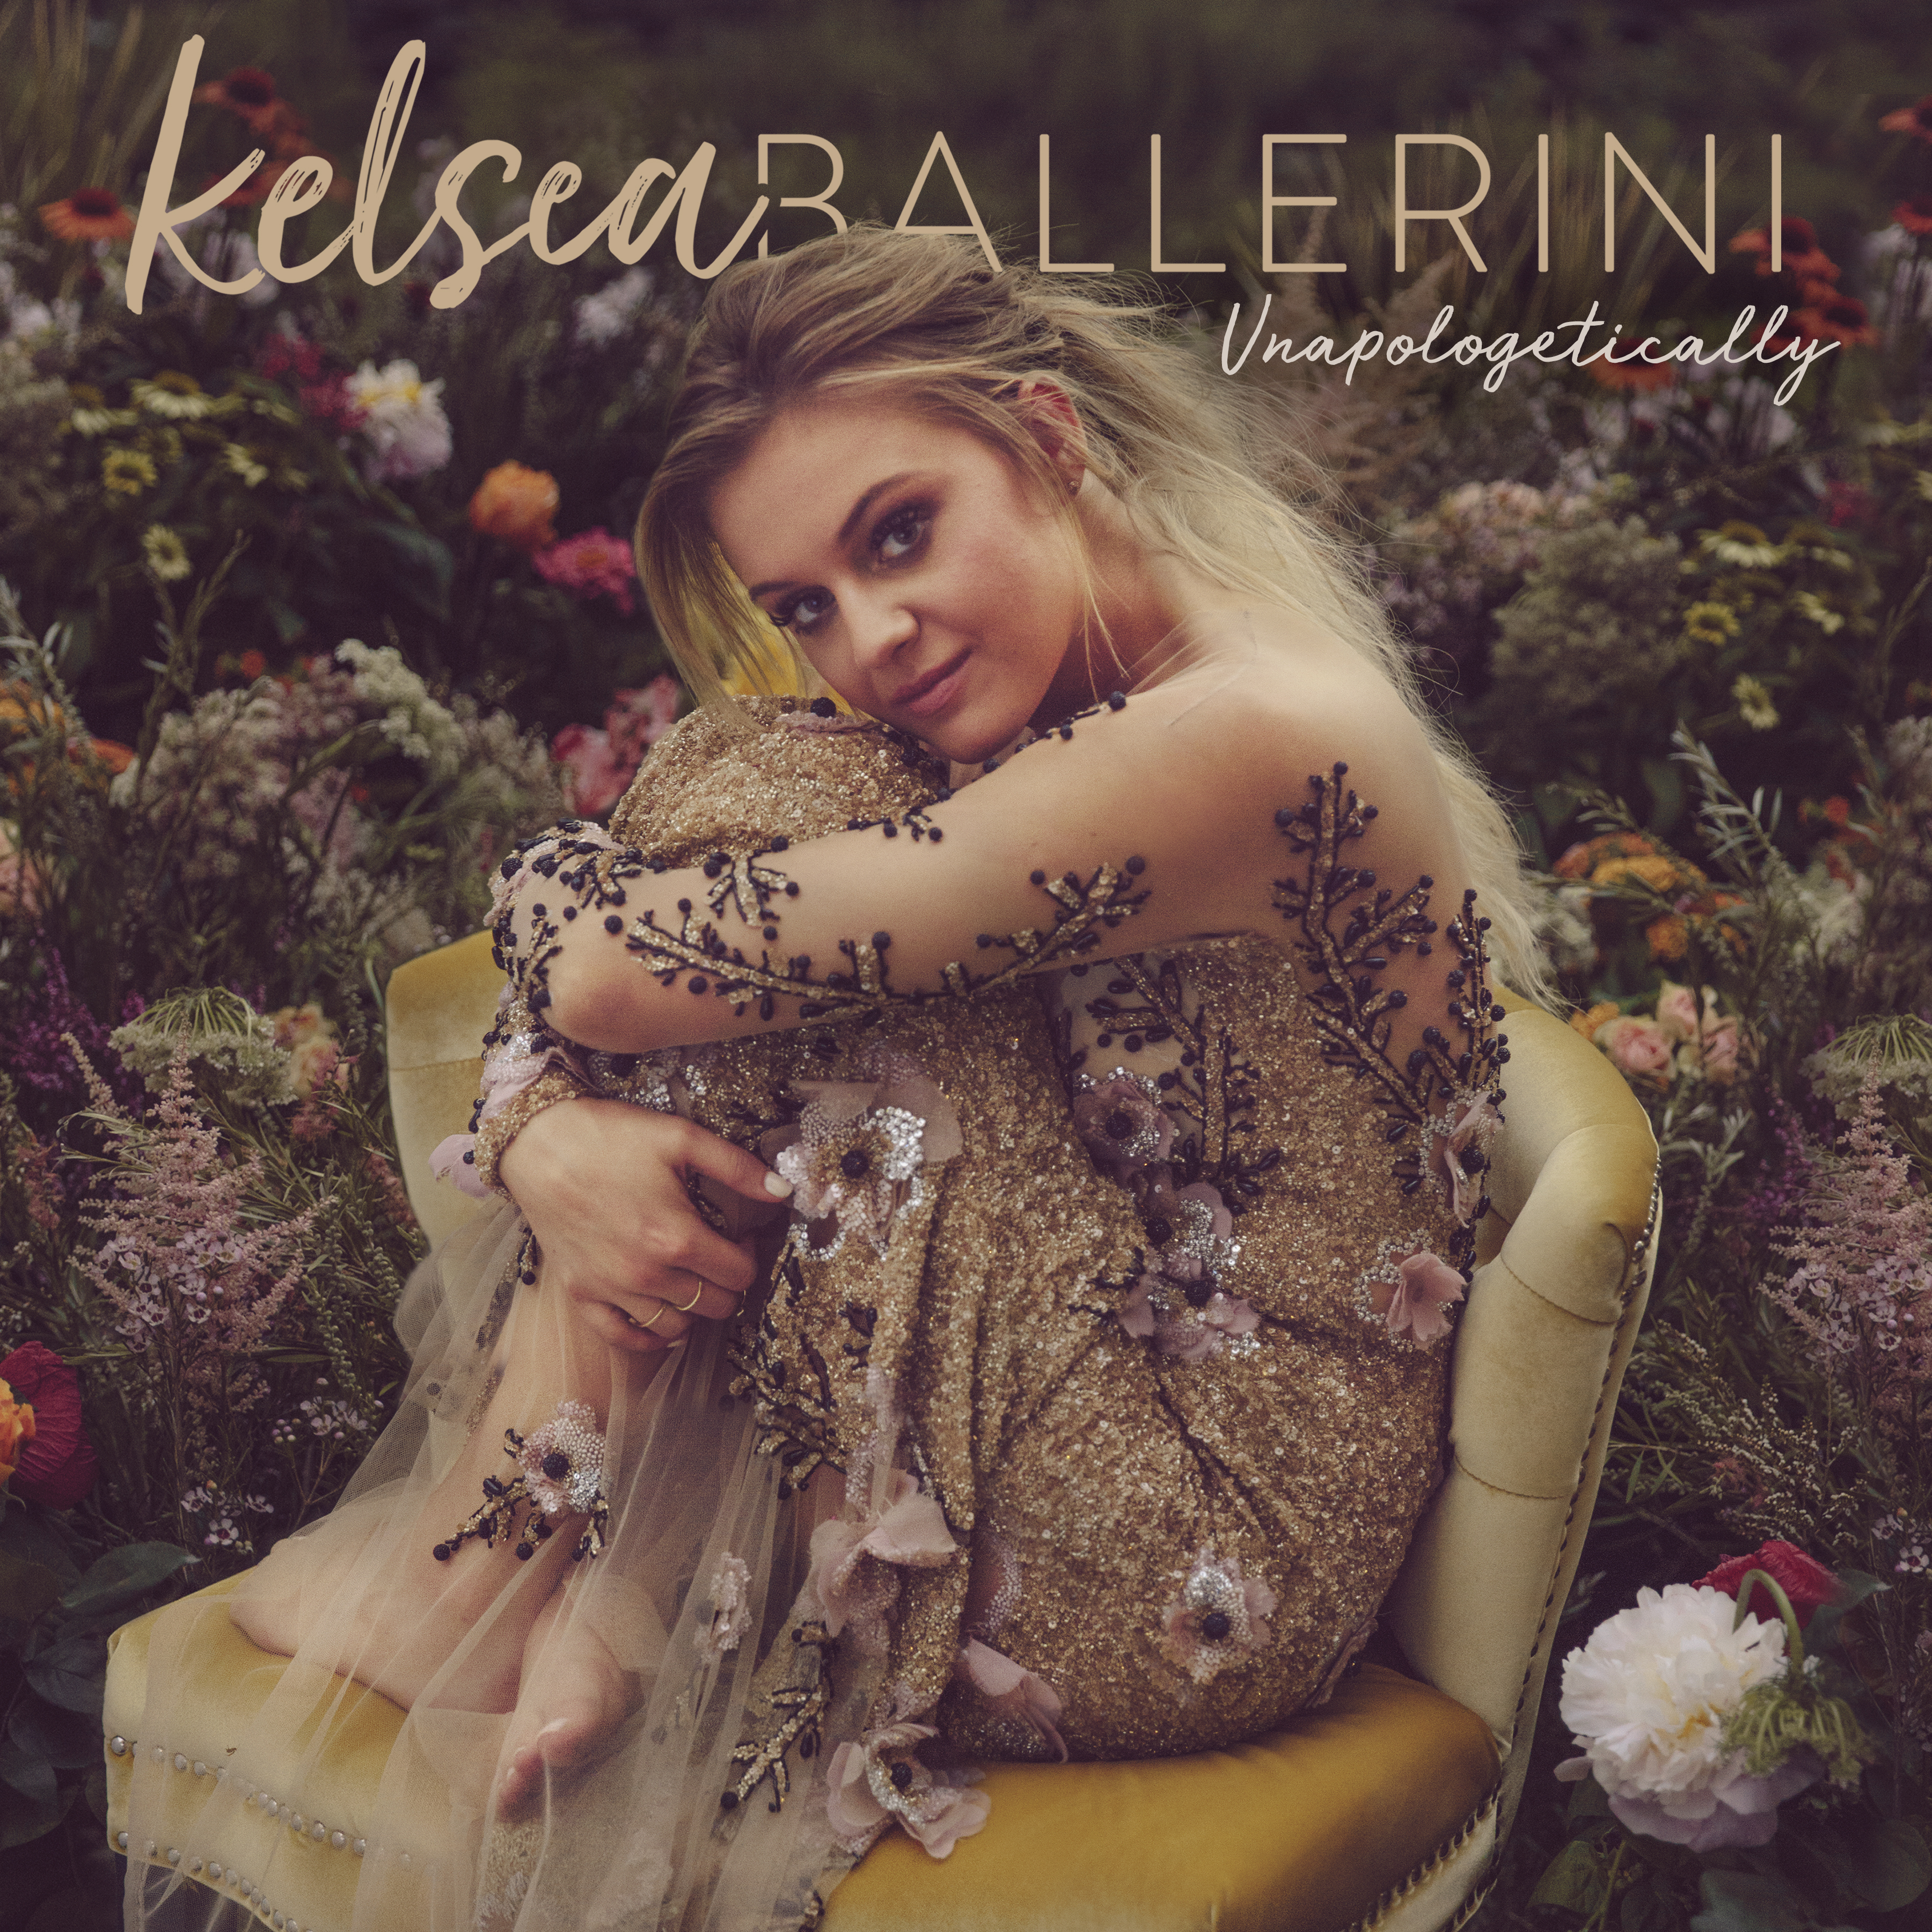 Kelsea Ballerini Unapologetically Matures on Sophomore Album